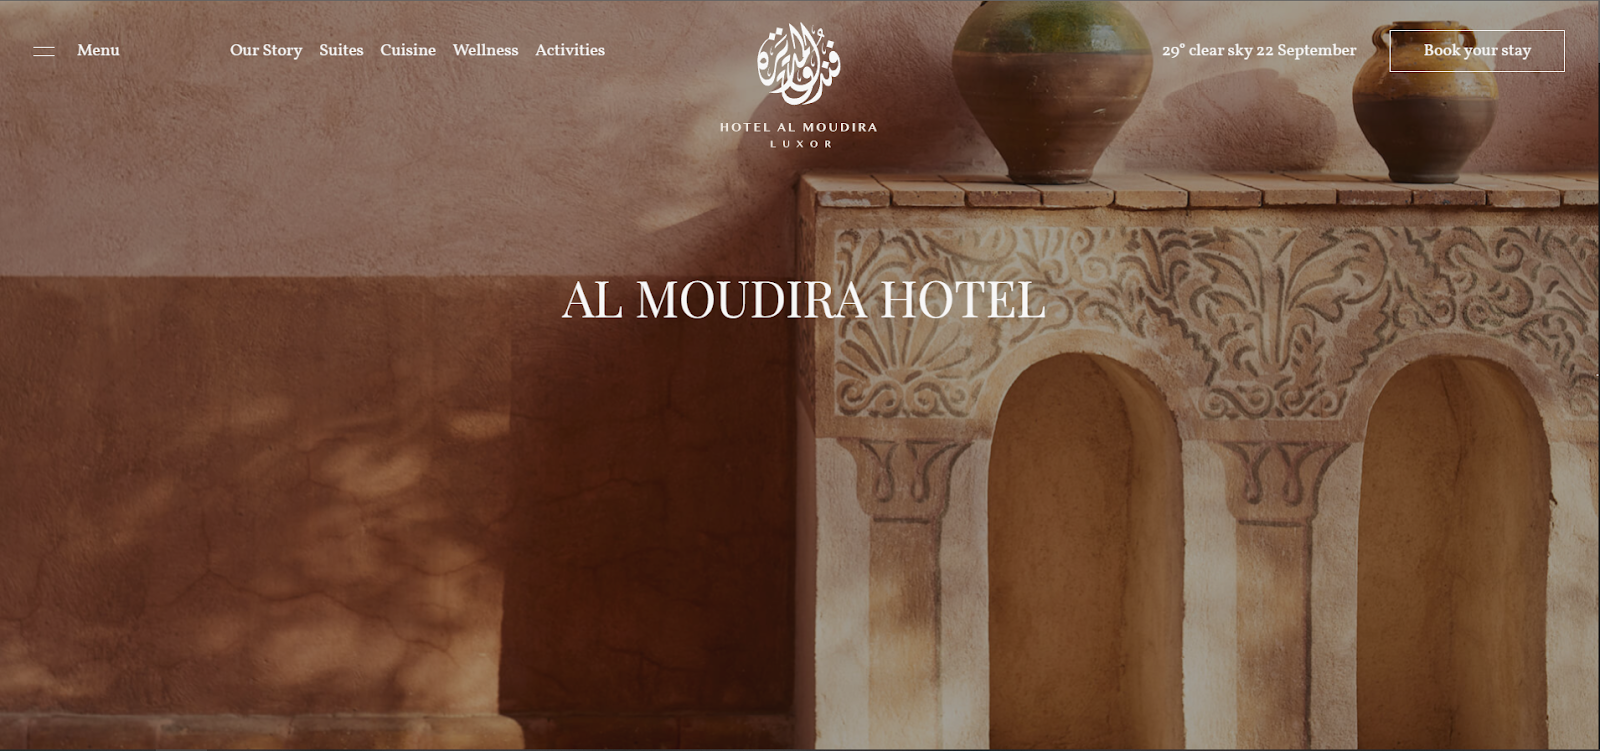 hotel website examples, Al Moudira Hotel